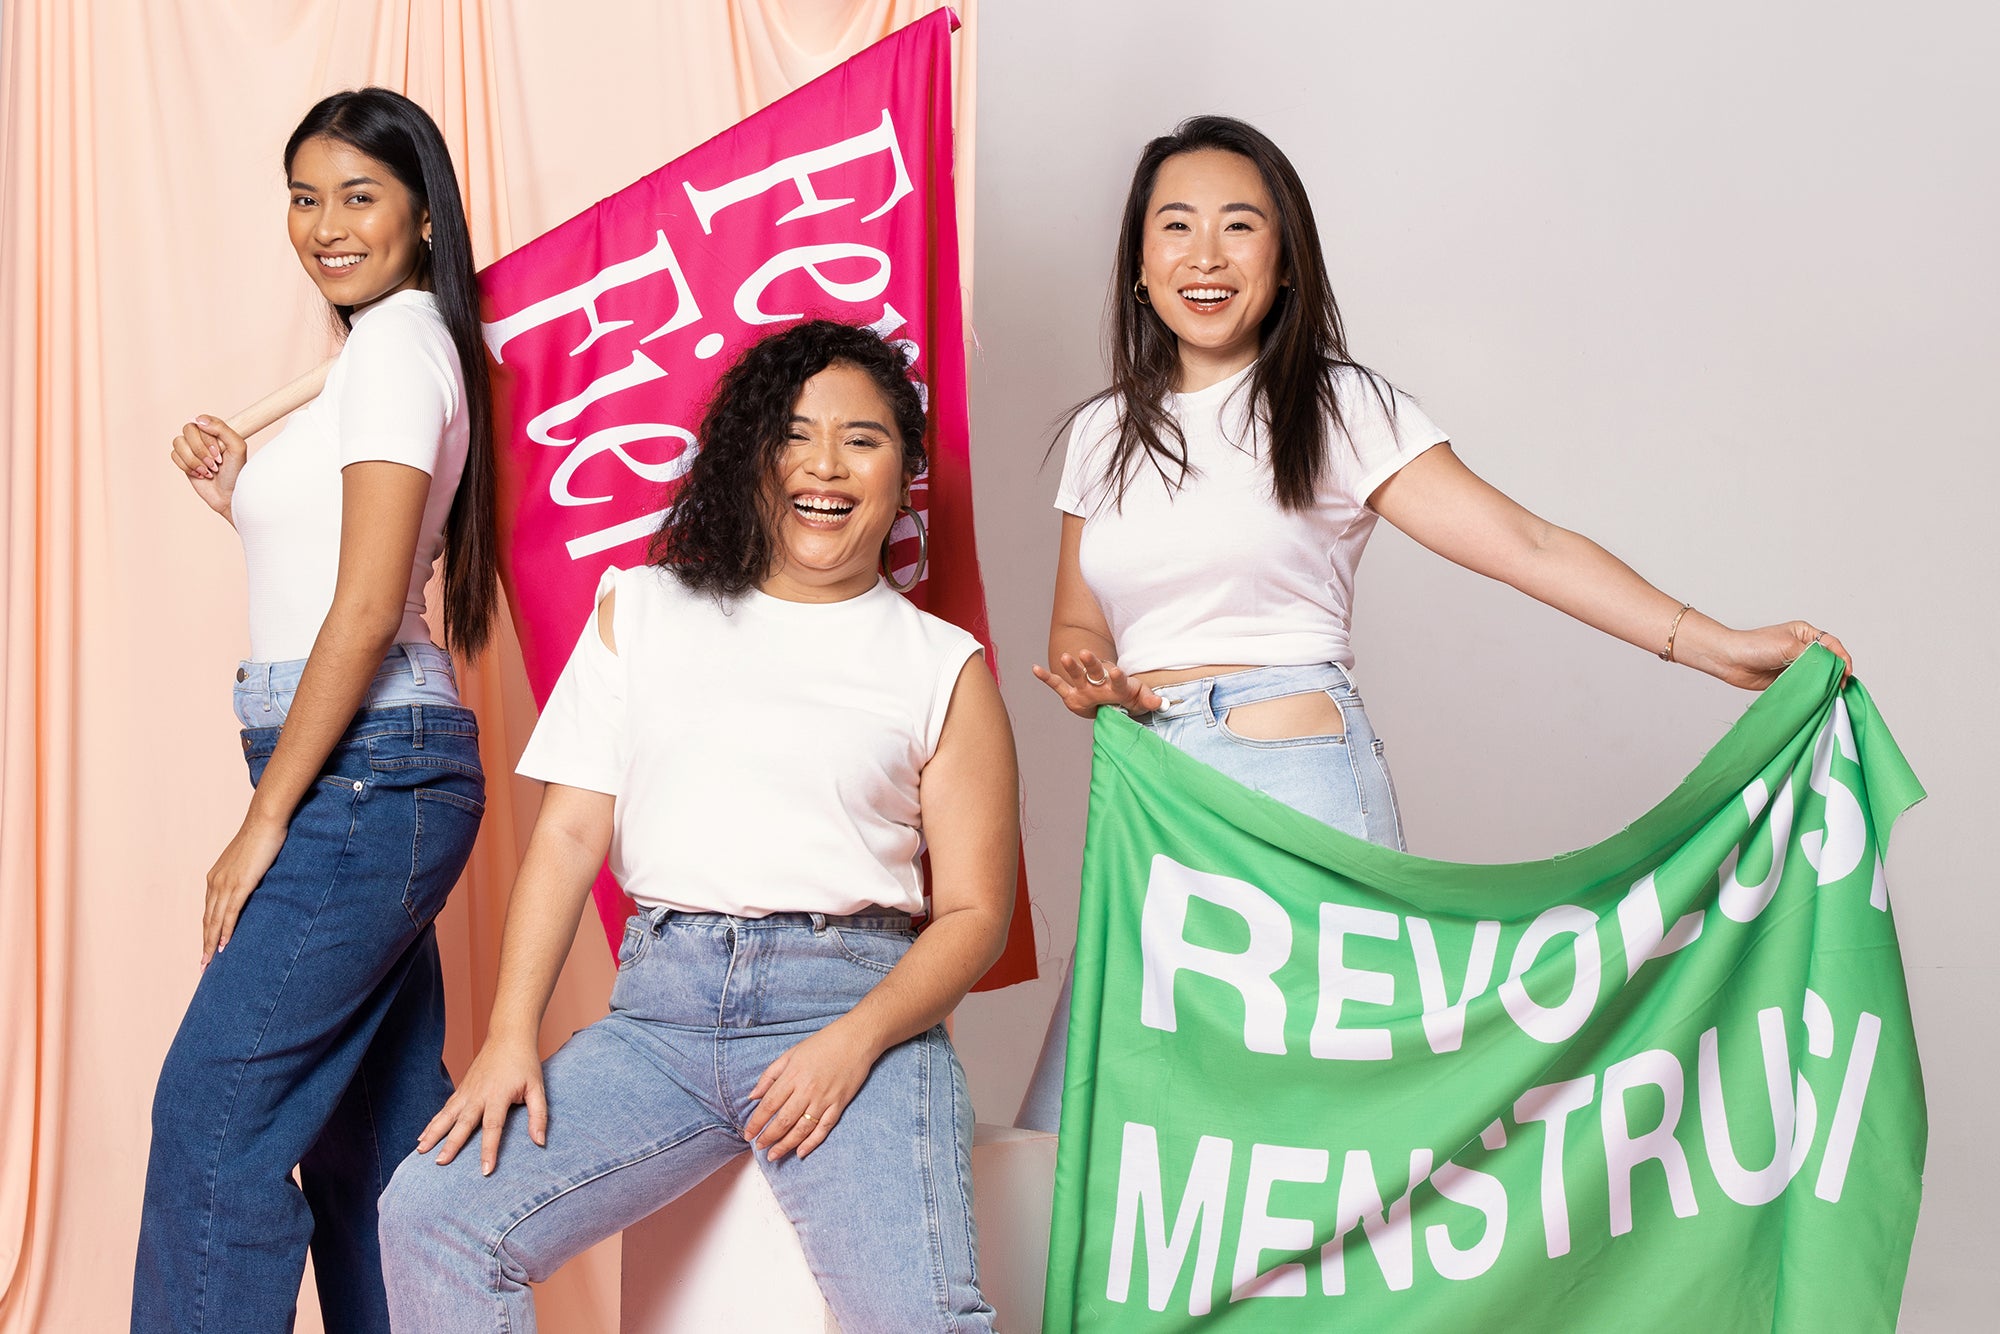 Menstrual Revolution - Education about menstrual health